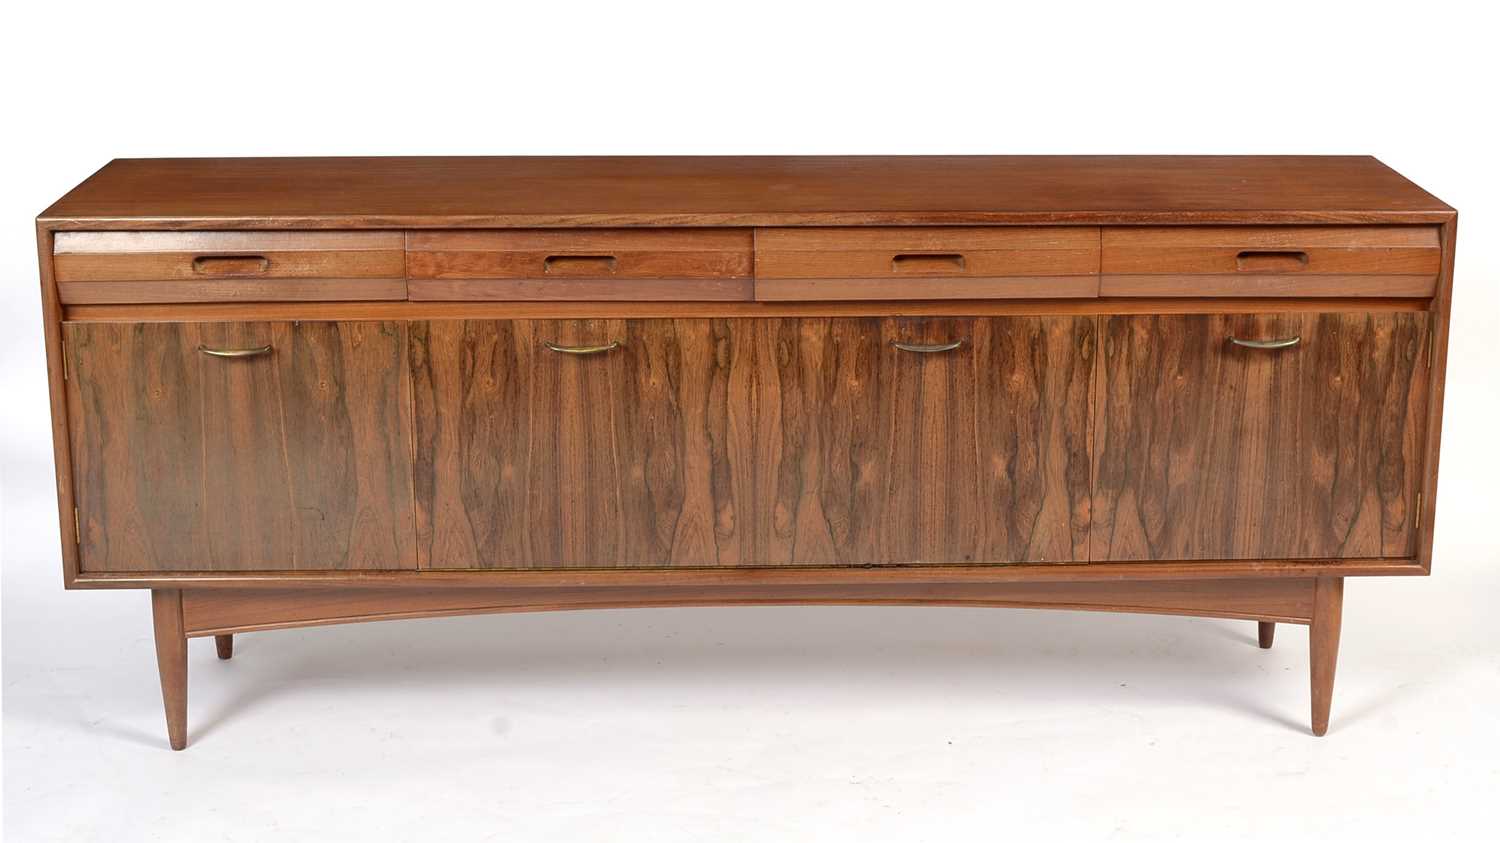 A mid Century teak and rosewood sideboard, possible by Elliotts of Newbury